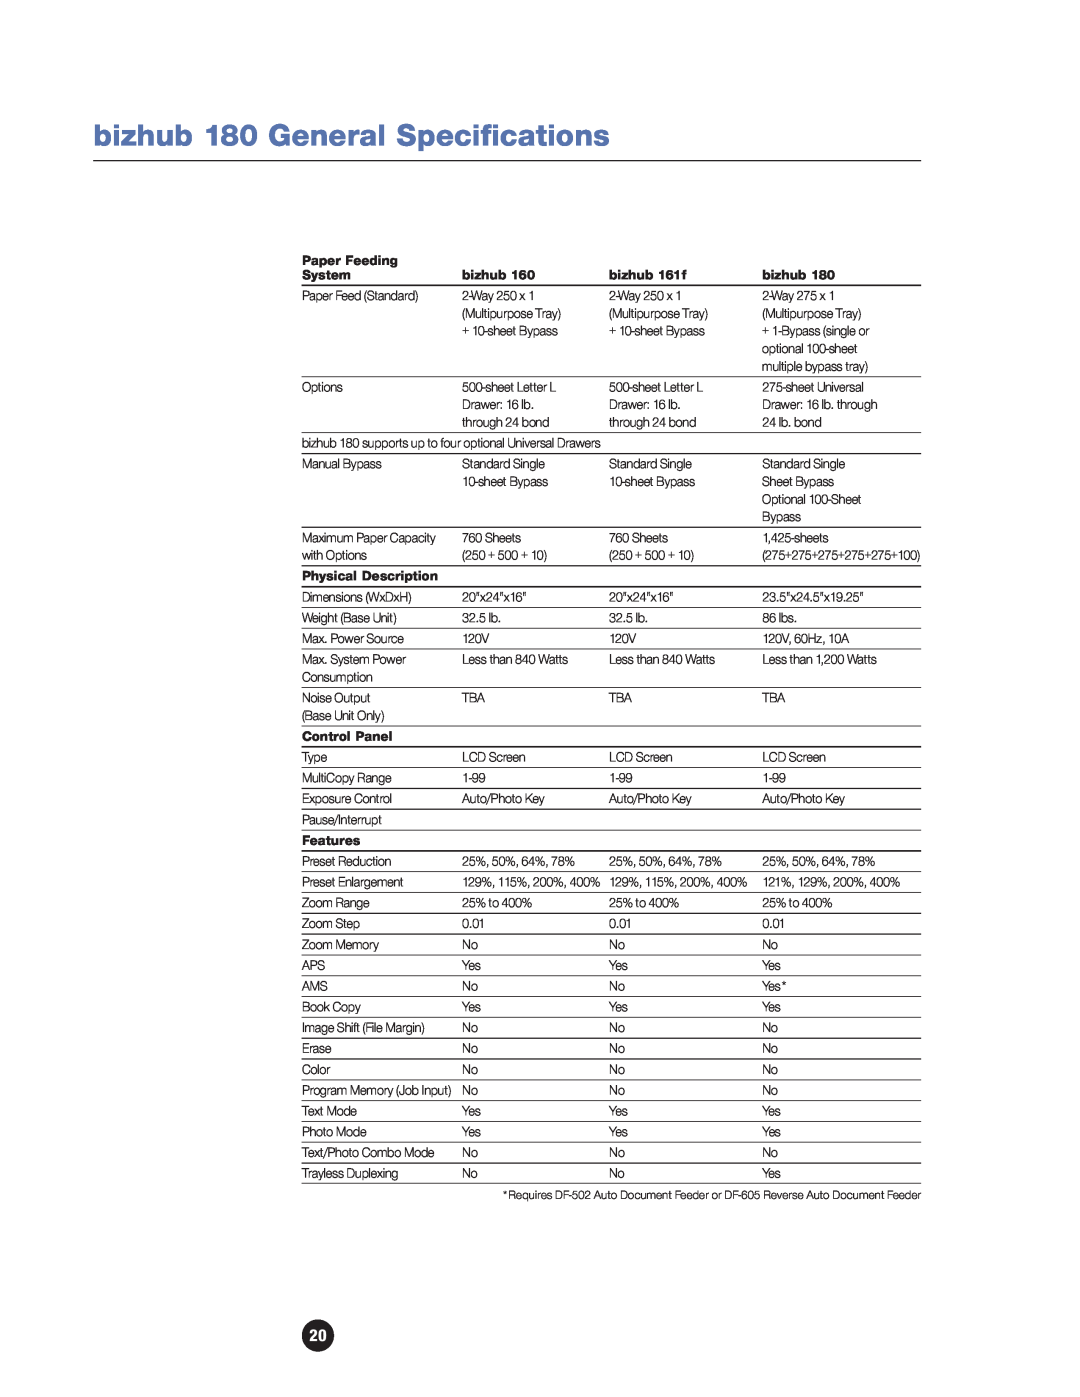 Konica Minolta manual bizhub 180 General Specifications, sheet Letter L Drawer 16 lb. through 24 bond 